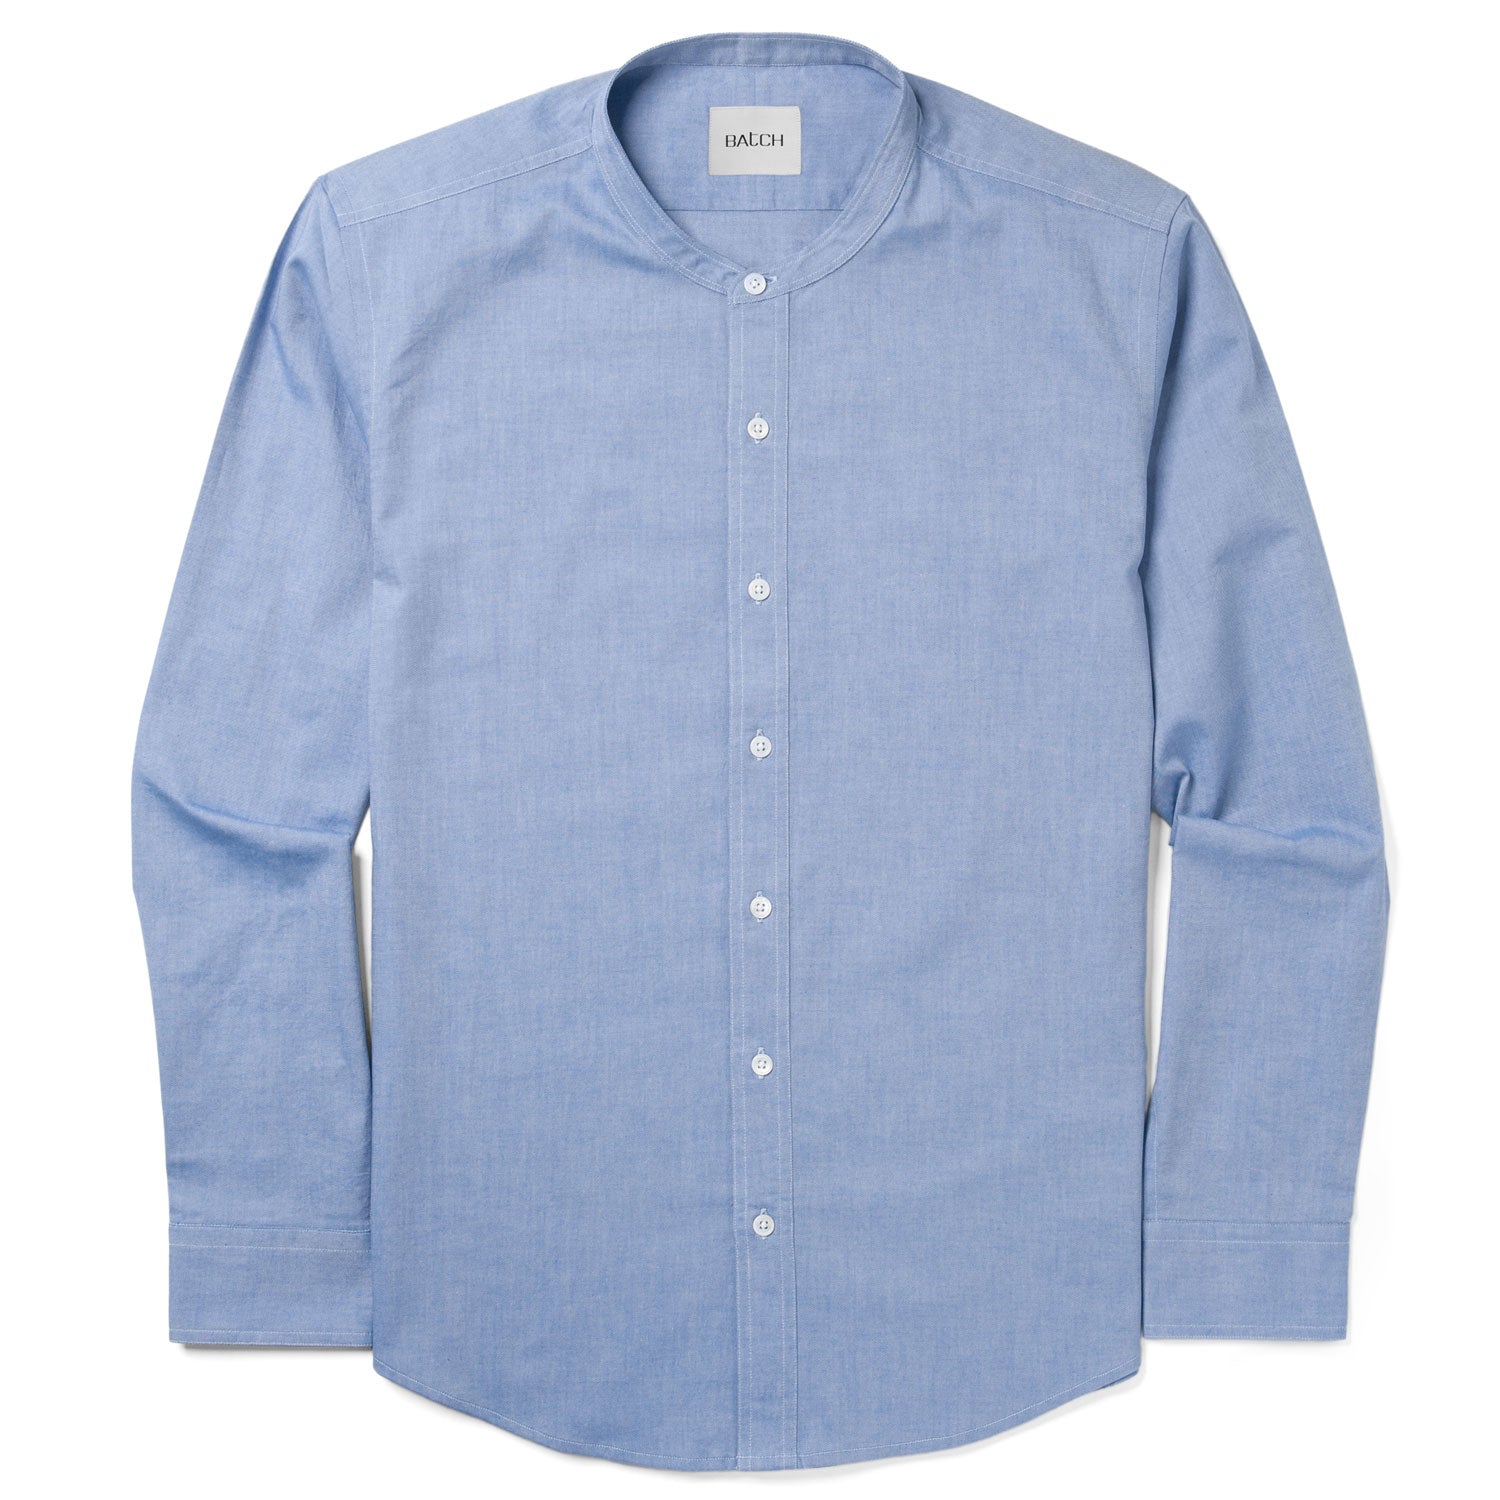 Essential Band Collar Button Down Shirt - Classic Blue Cotton Oxford